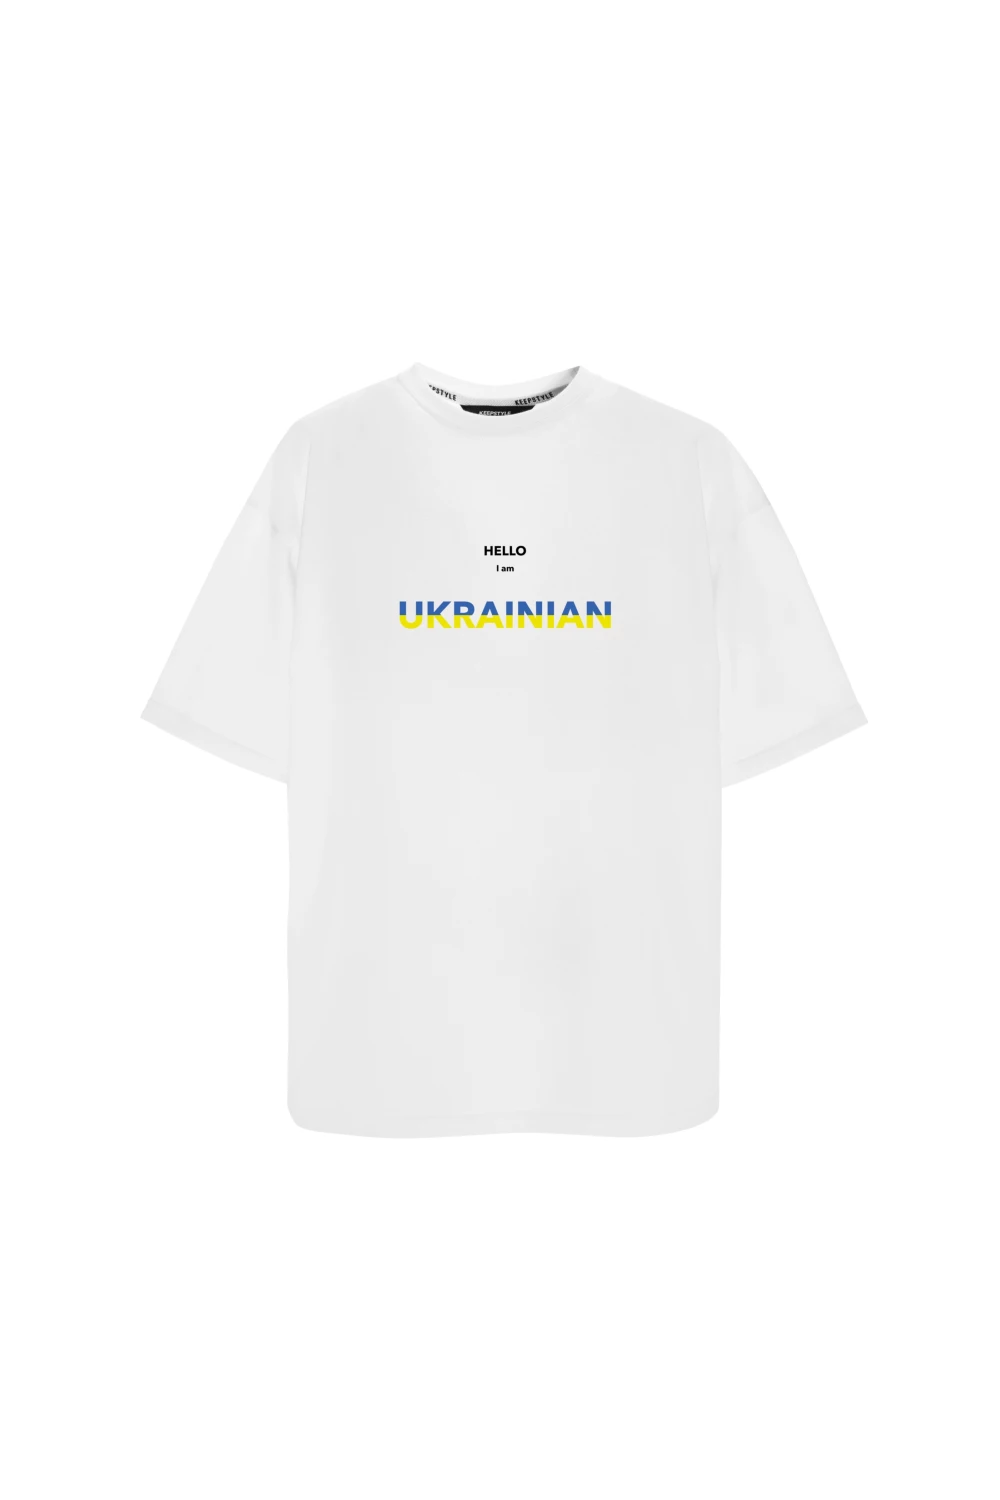 ukrainian t-shirt in white